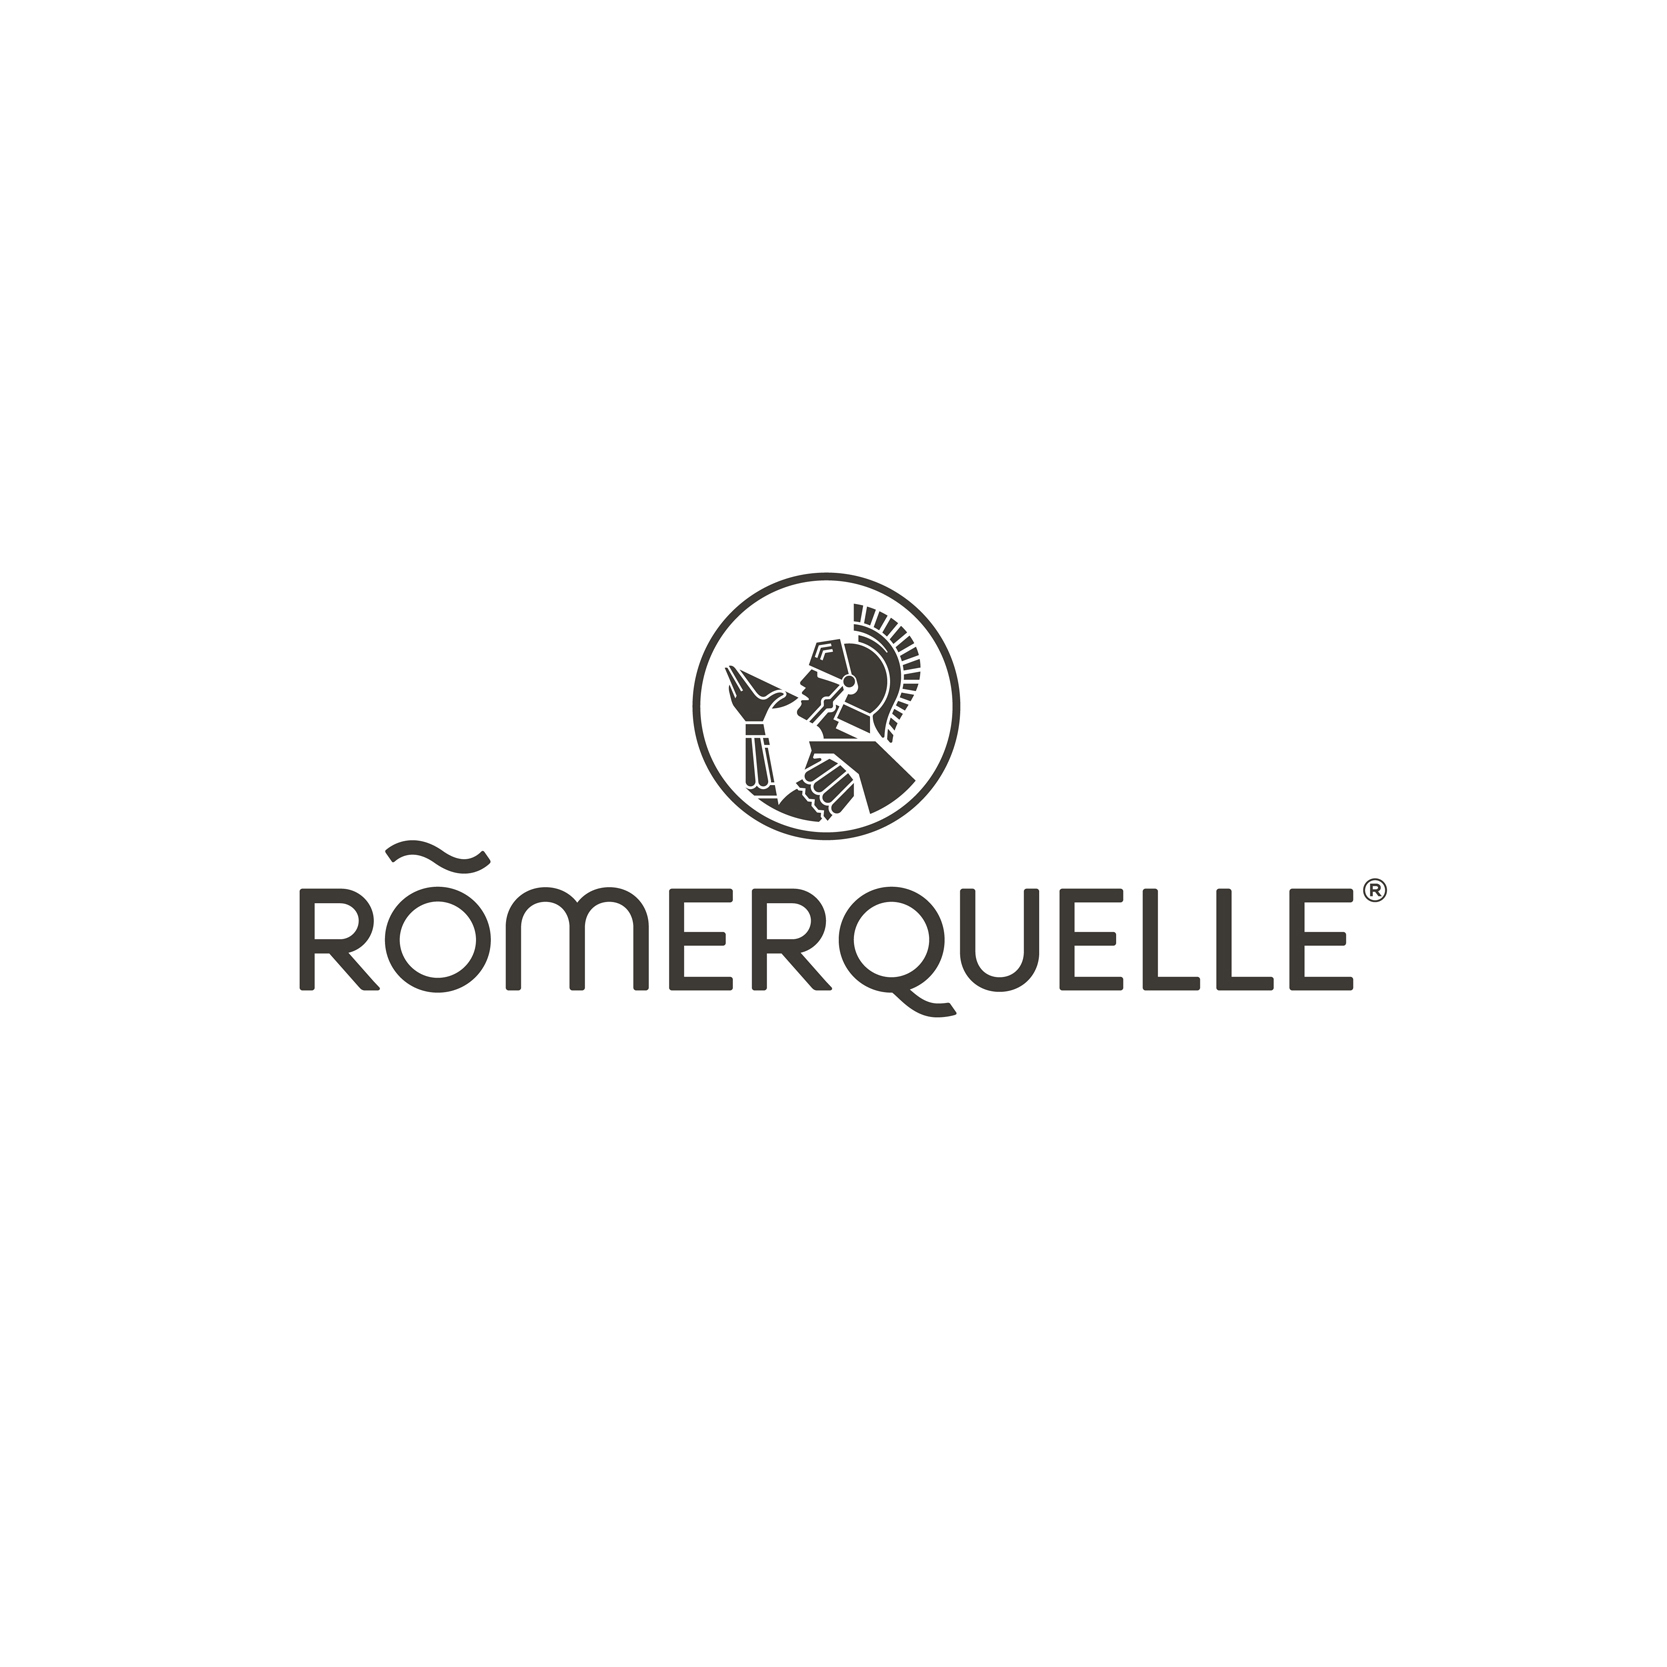 Römerquelle logo web